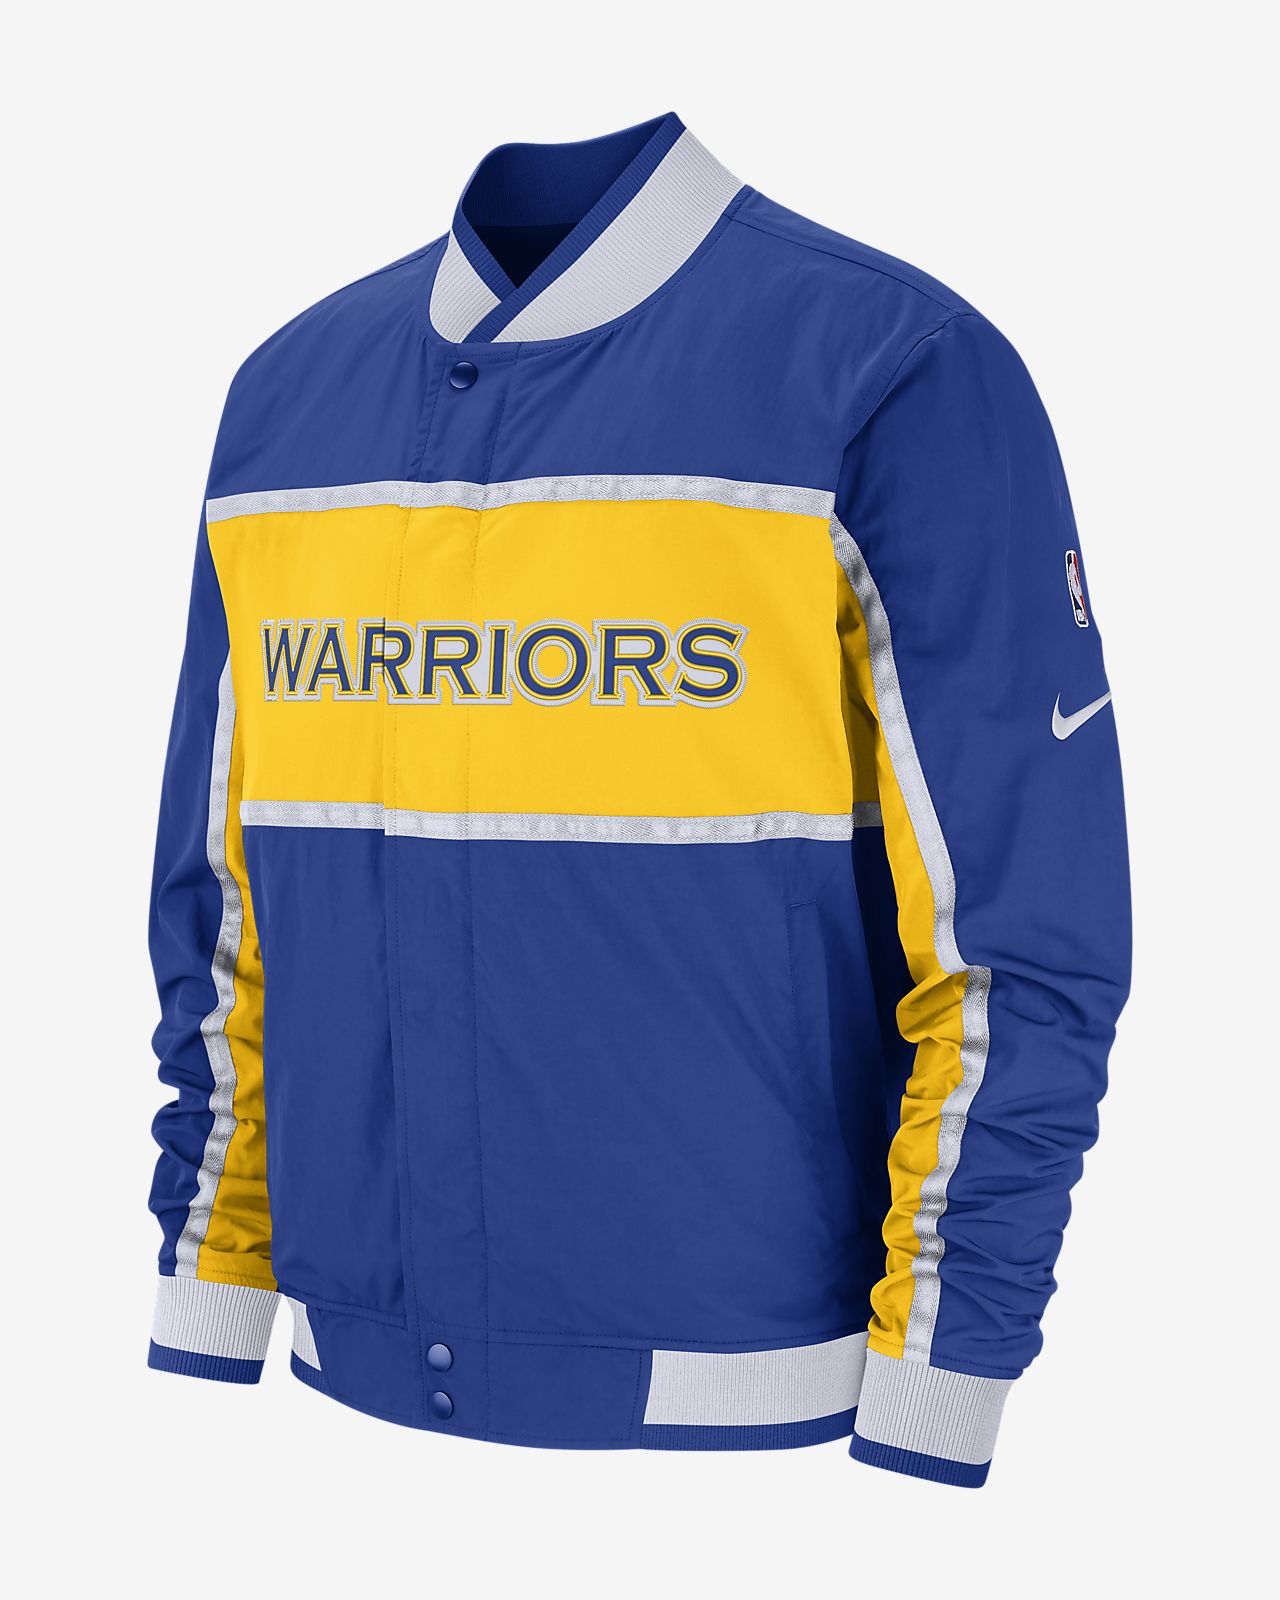 warriors jacket